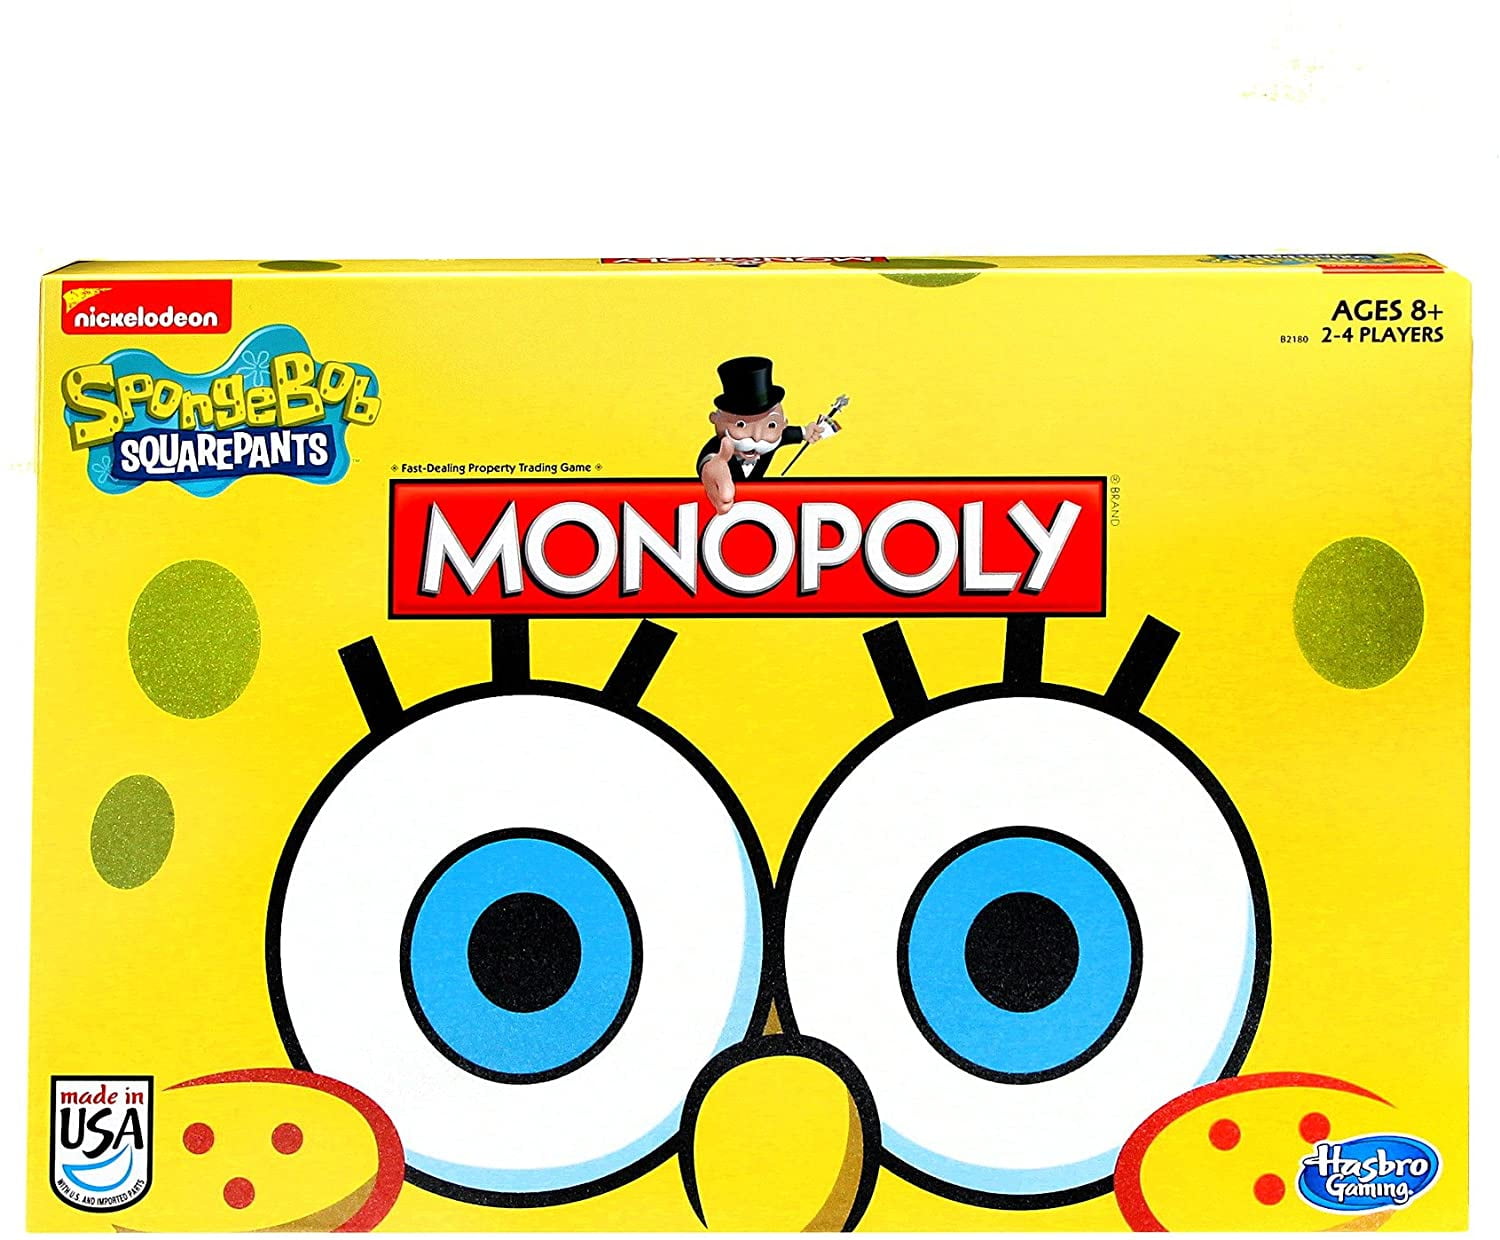 Pieces Monopoly Game SpongeBob SquarePants Edition Cards & Money Instructions 